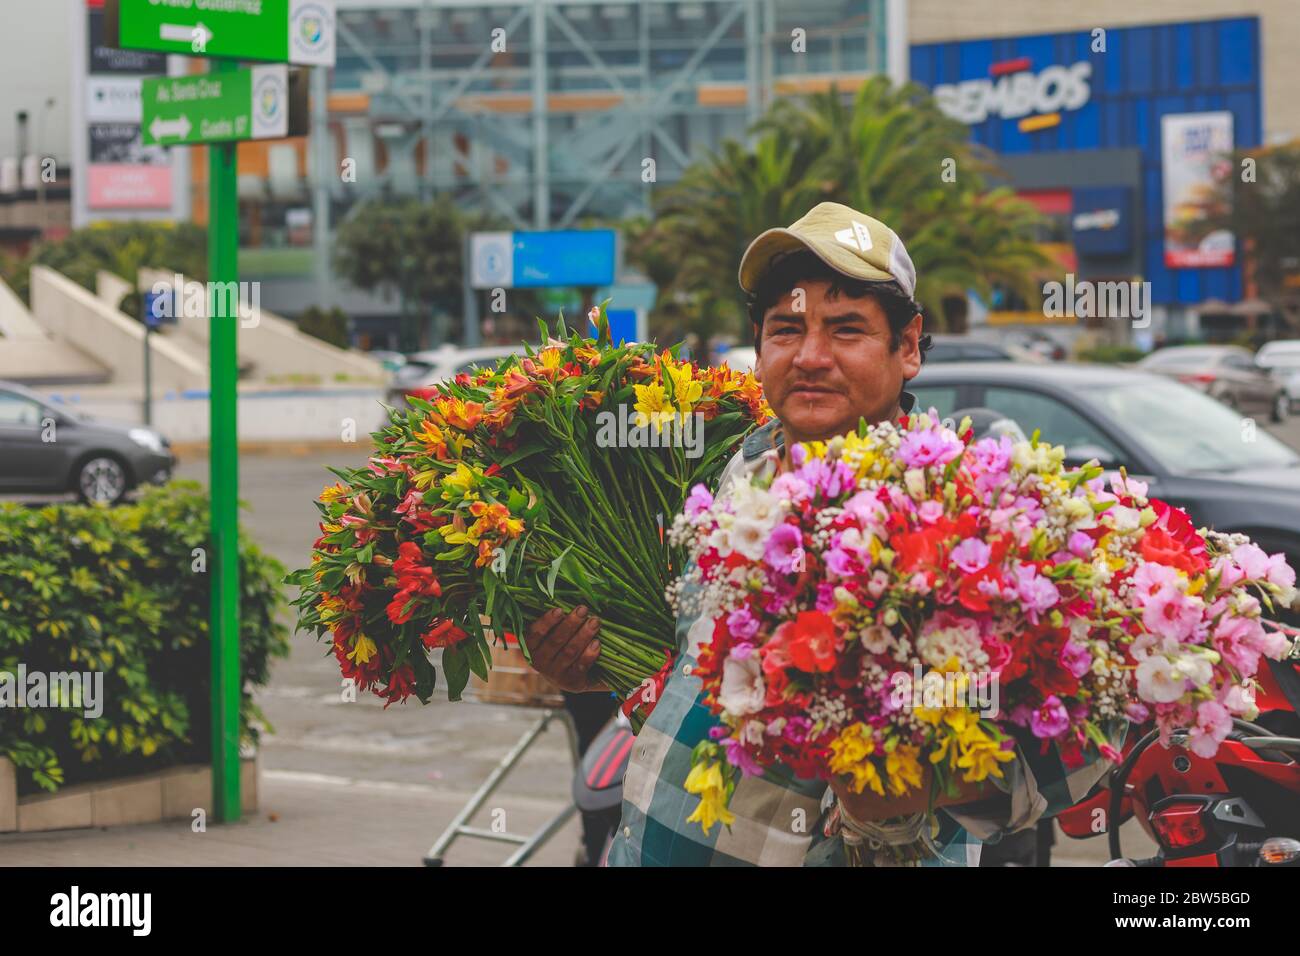 Peruvian man selling flowers on the street Stock Photo